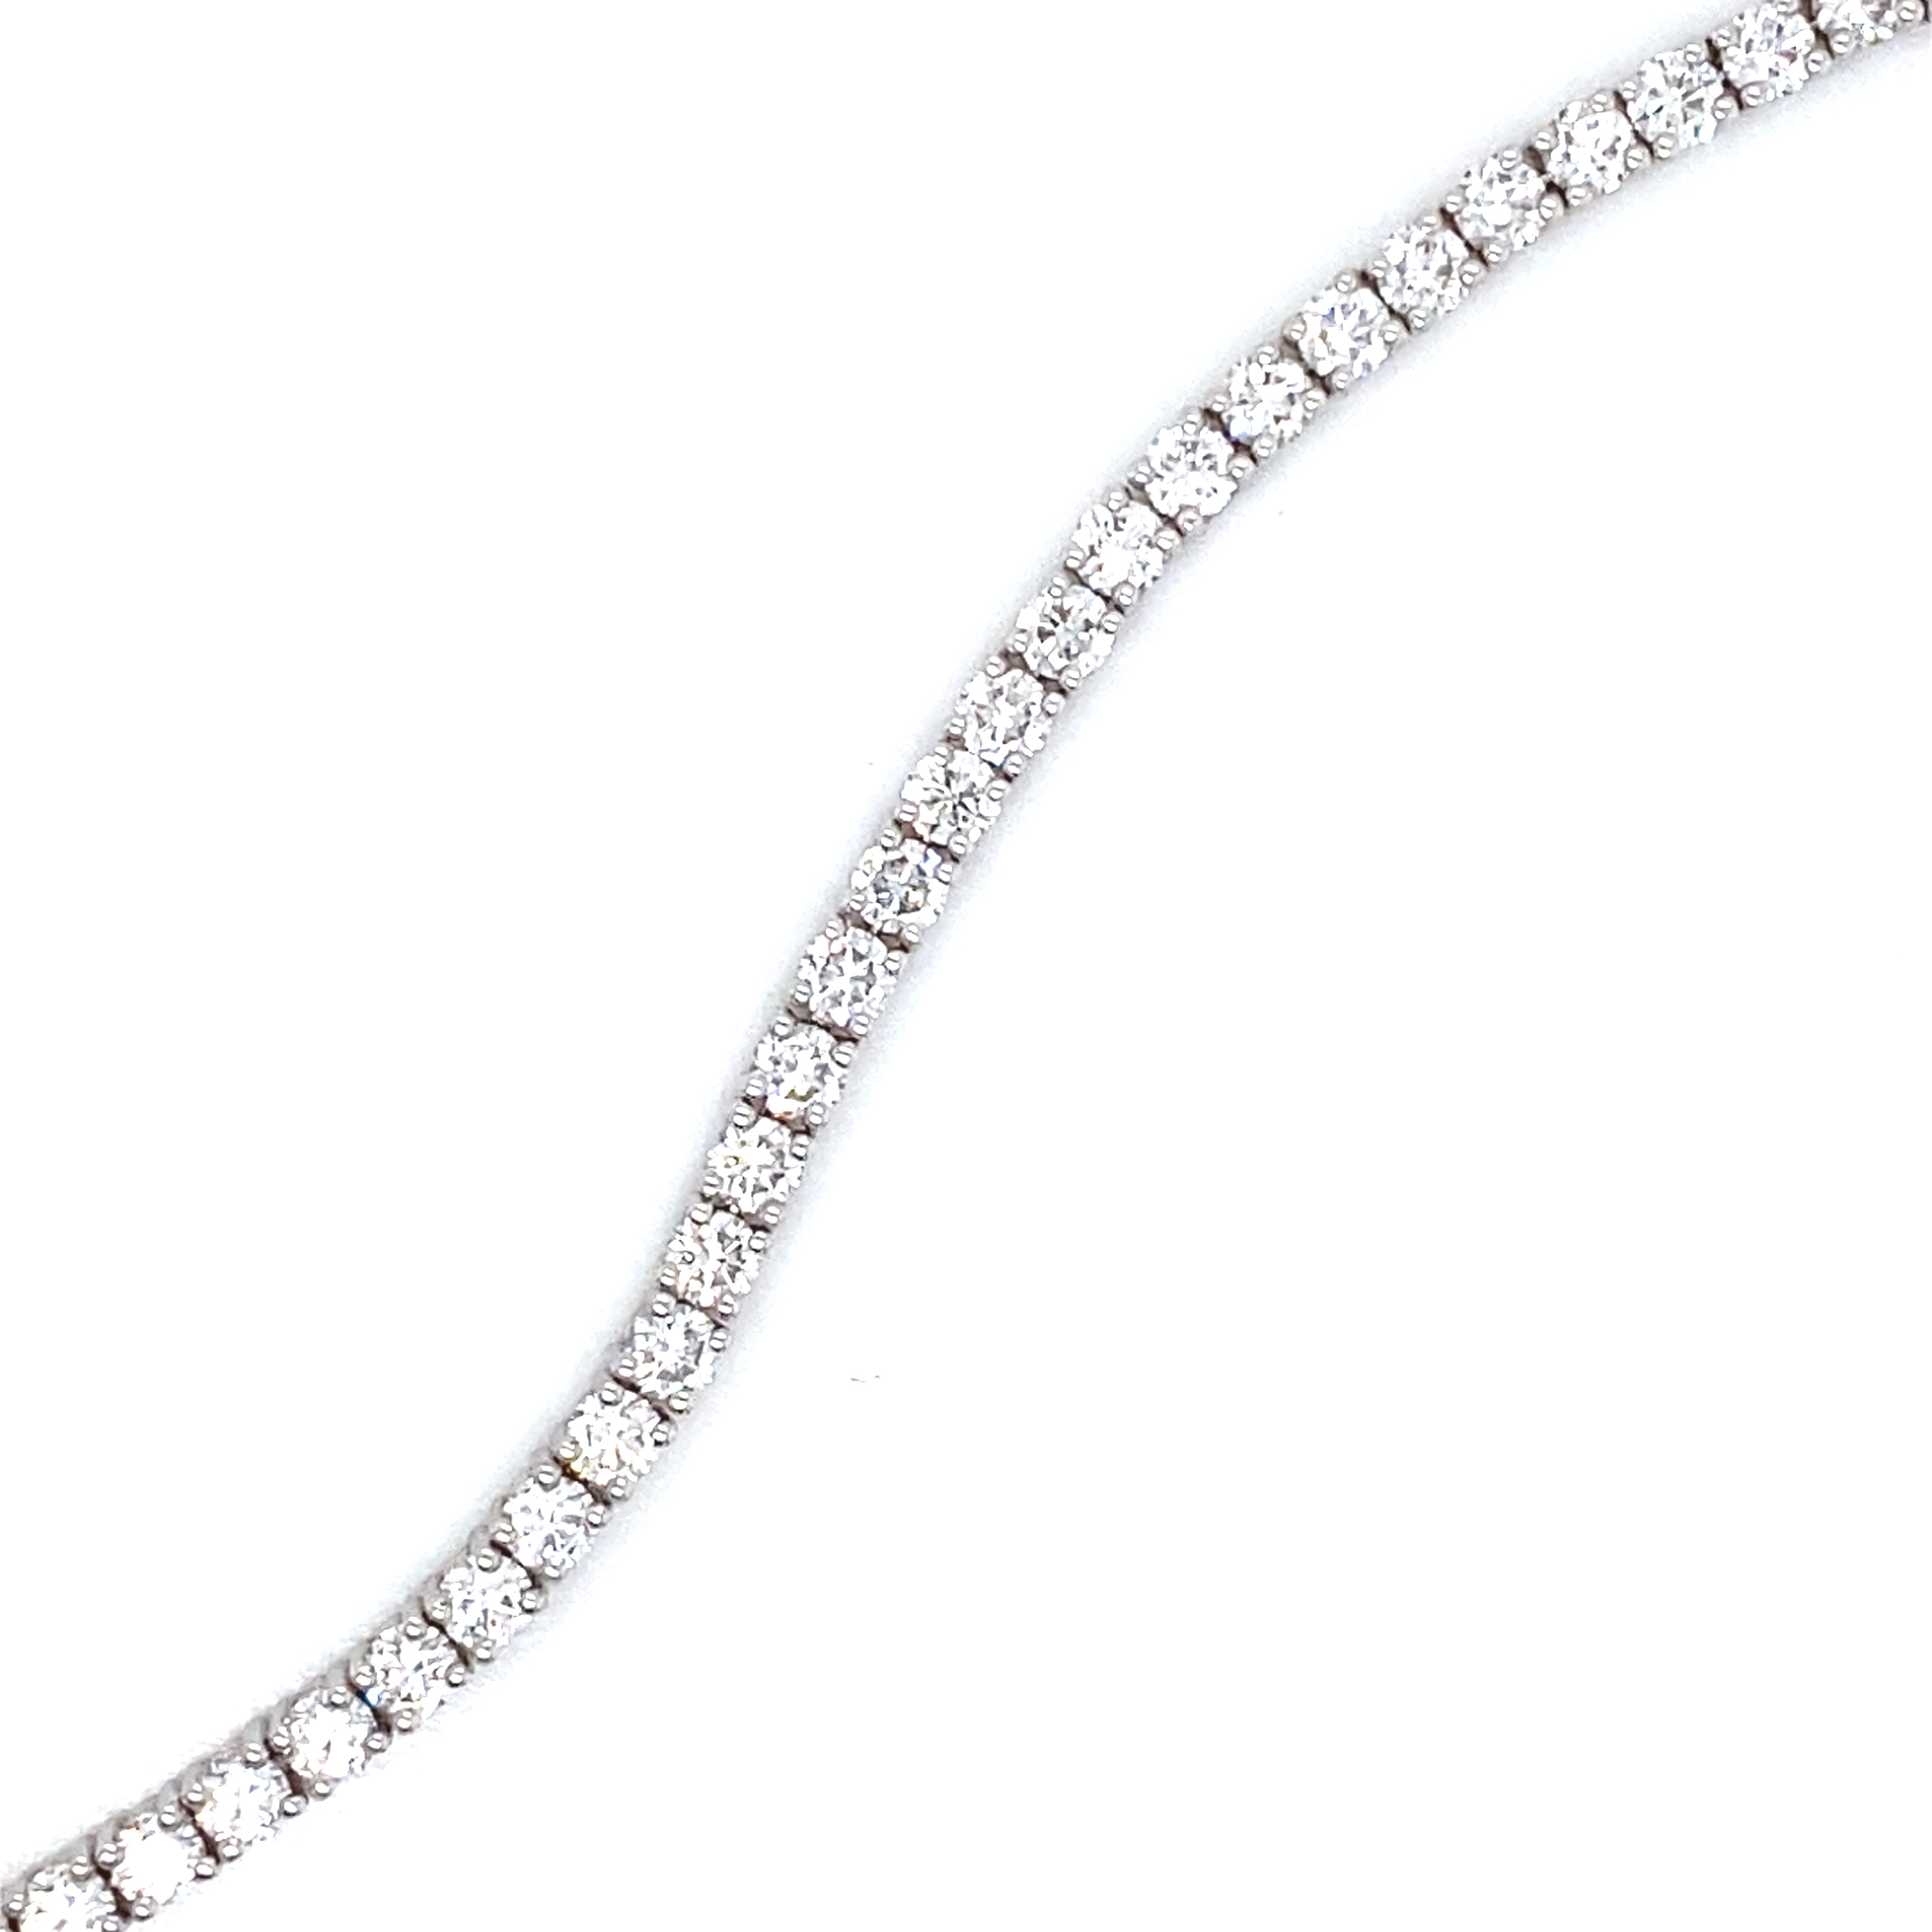 A Platinum and Diamond Line Bracelet - 4.11 carats F/G Vs